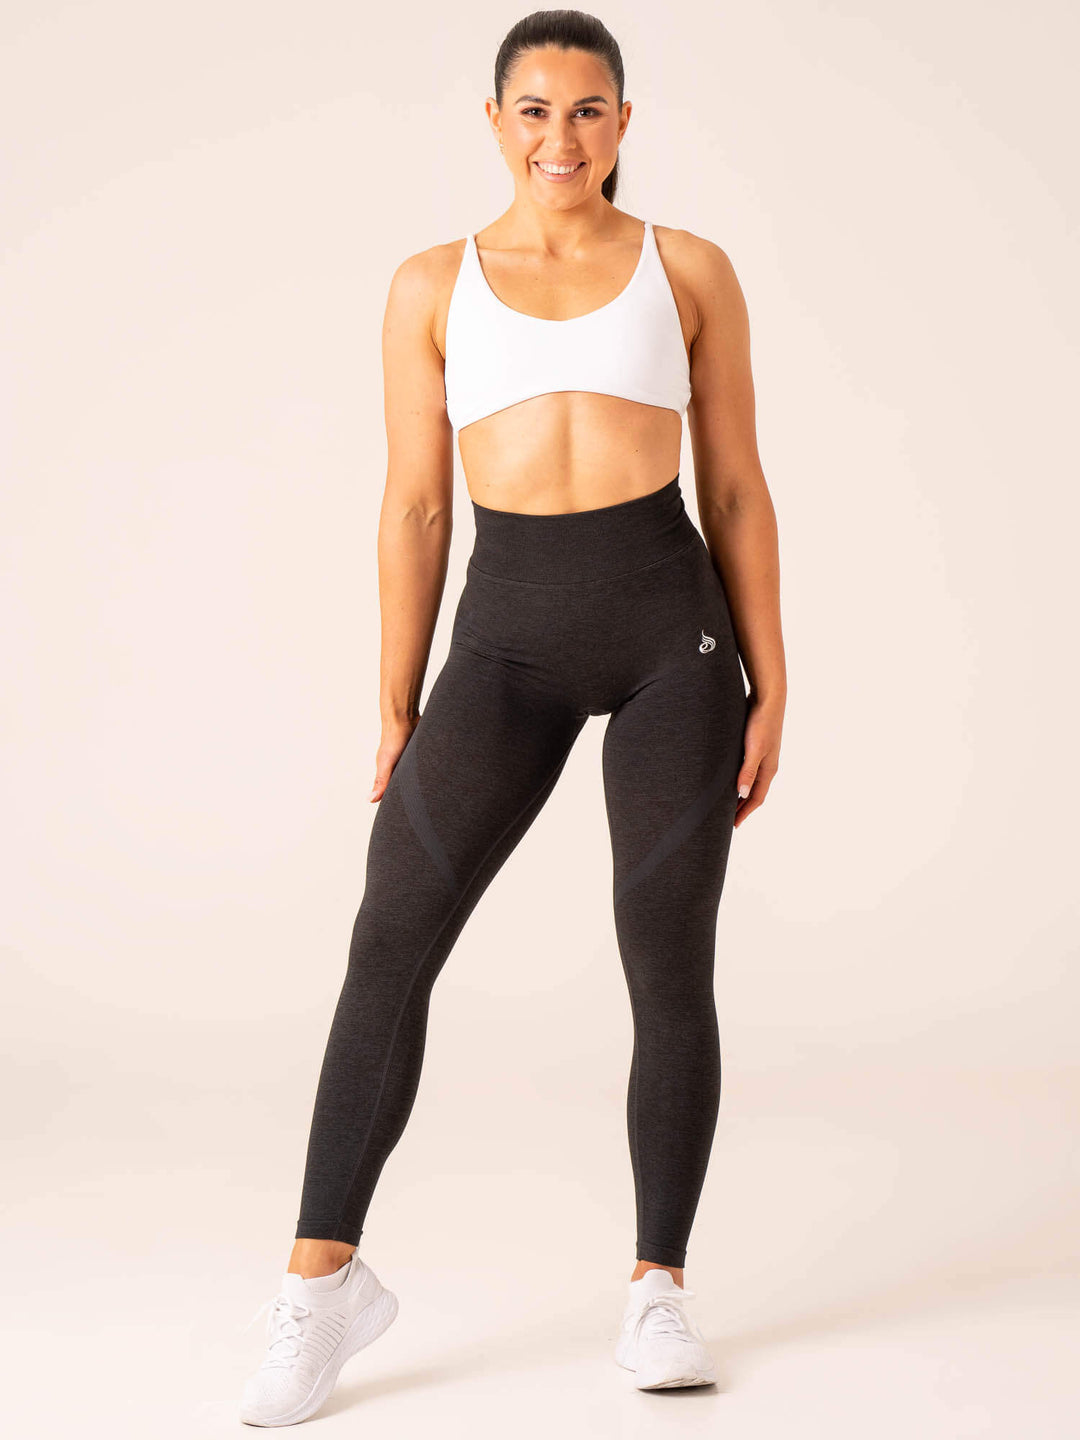 Seamless Black Women Bra Tights 92 Polyester 8 Spandex Leggings